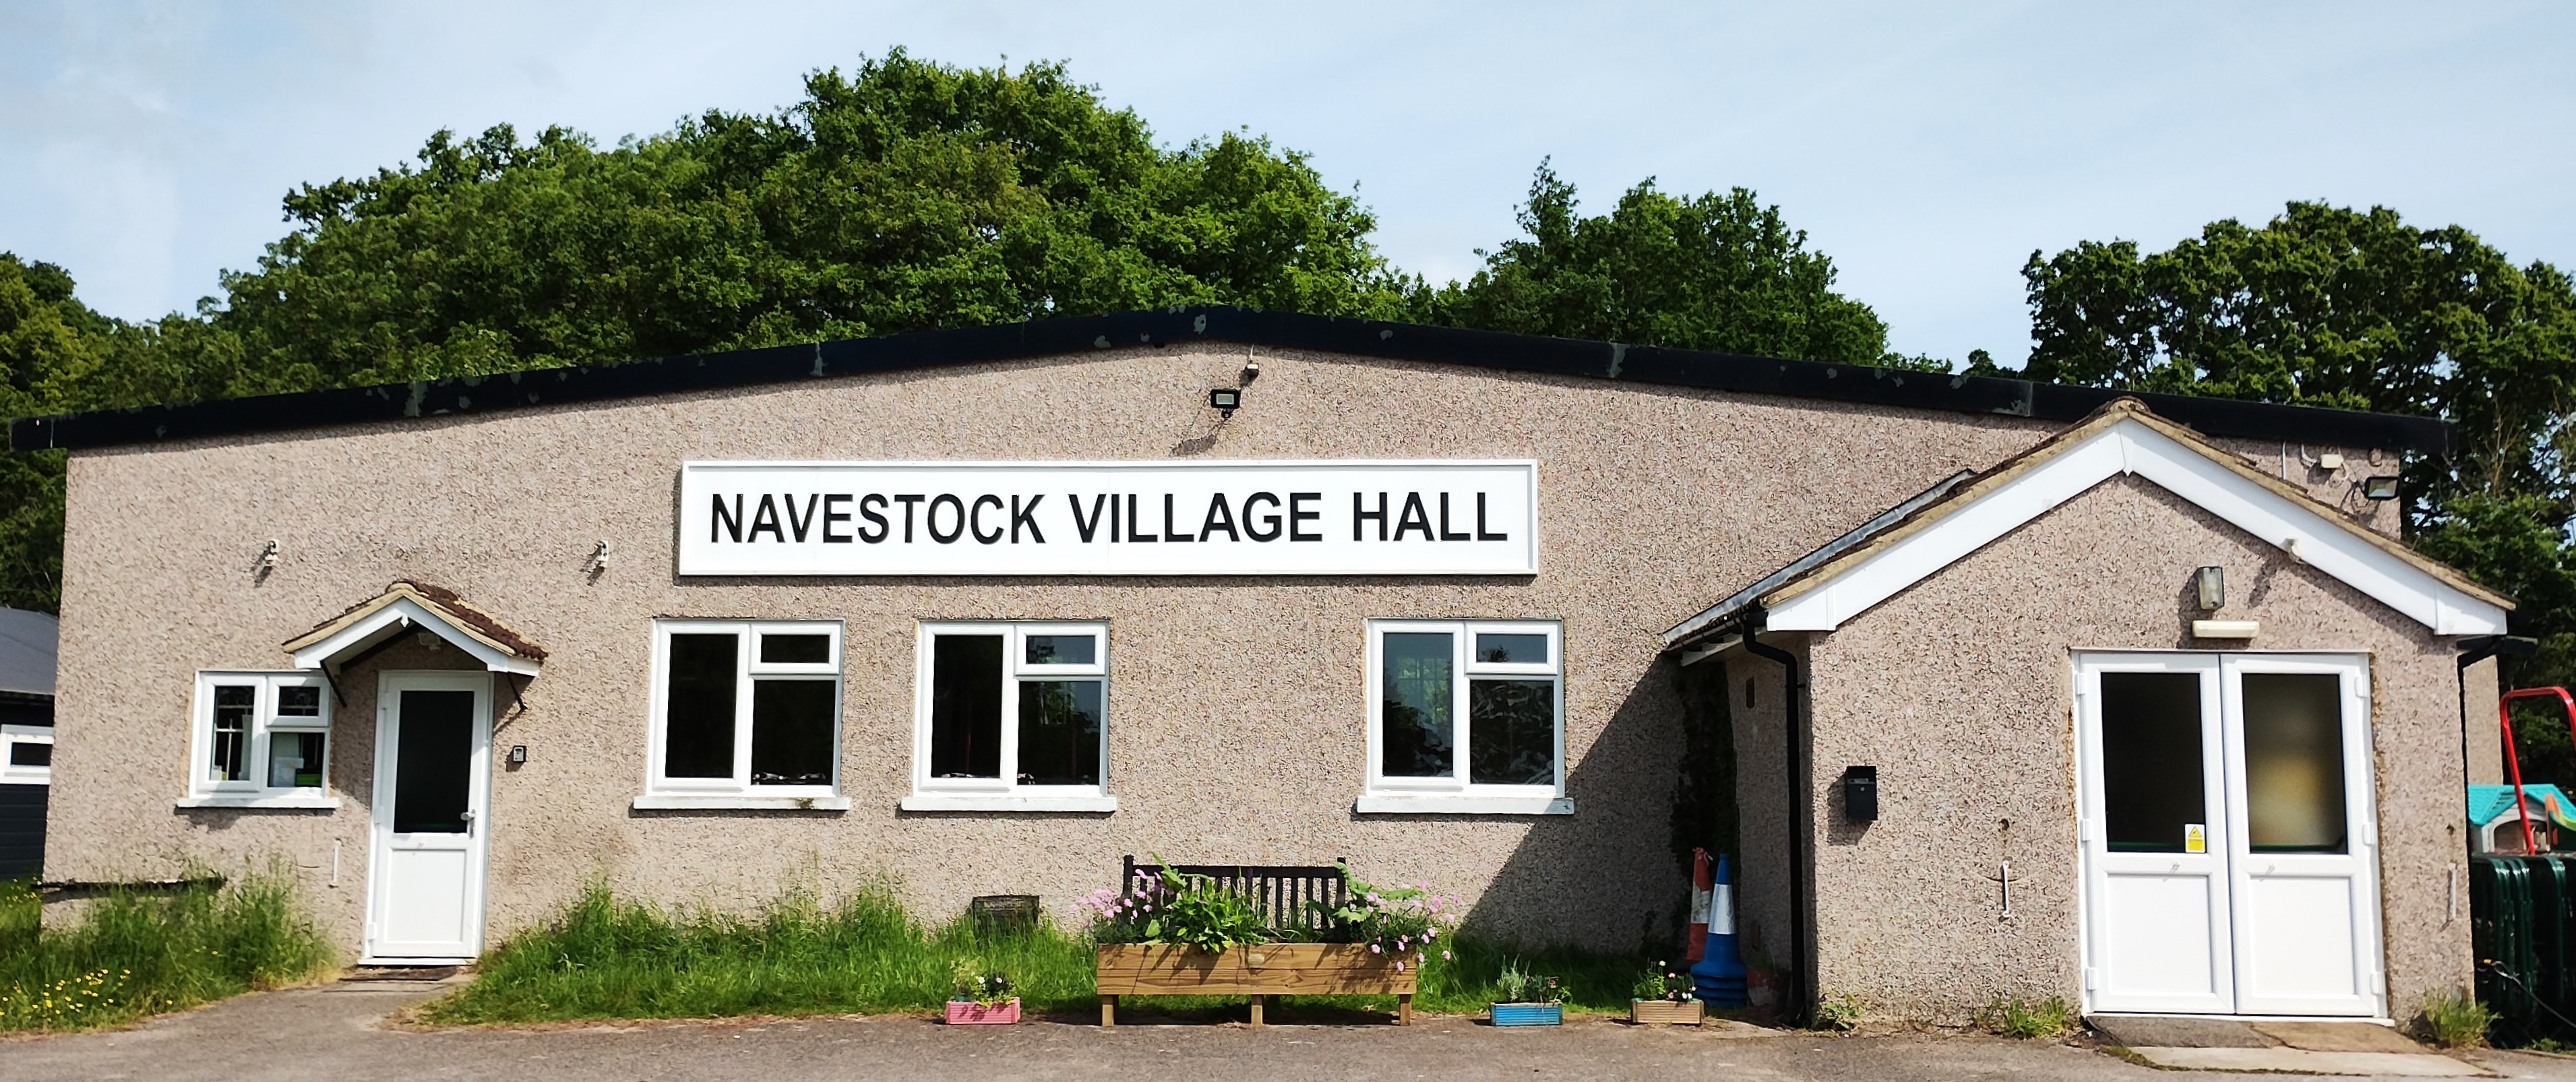 Navestock Village Hall